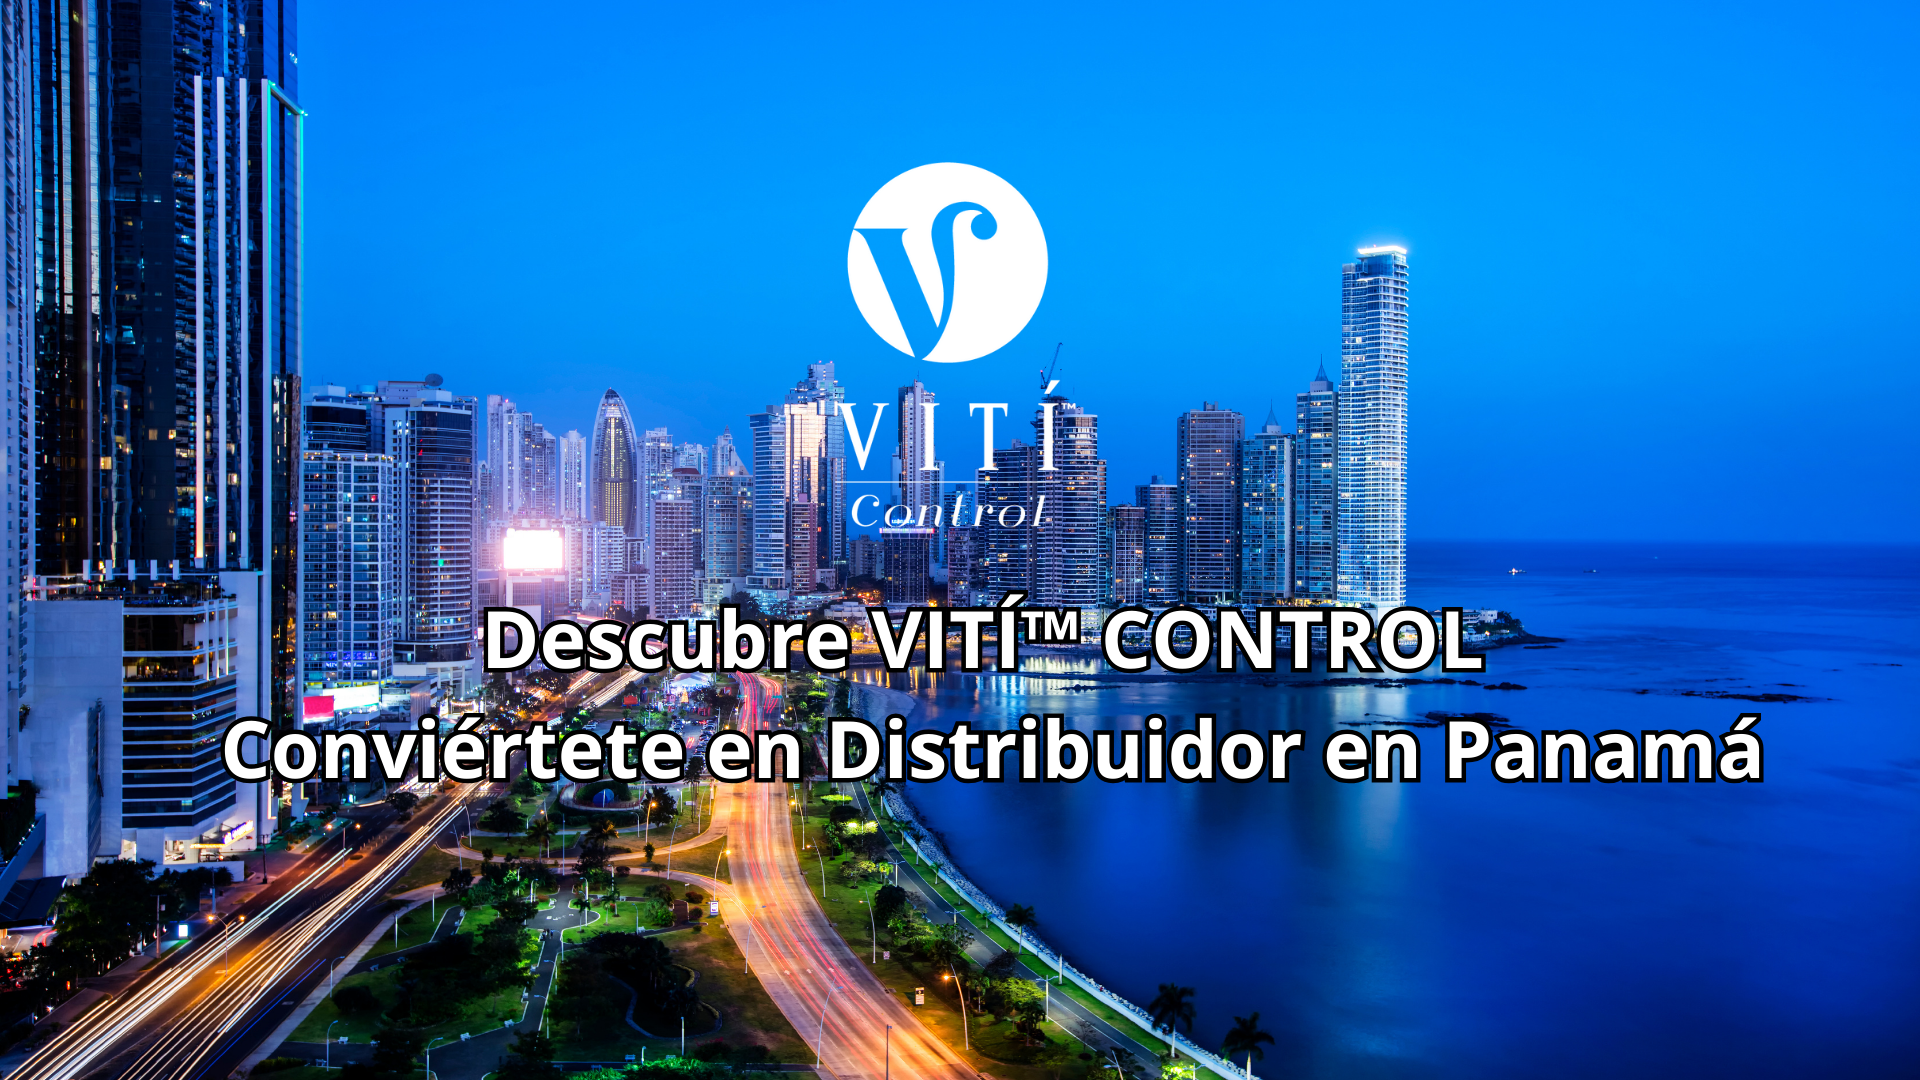 En este momento estás viendo Descubre VITÍ CONTROL: Conviértete en Distribuidor en Panamá